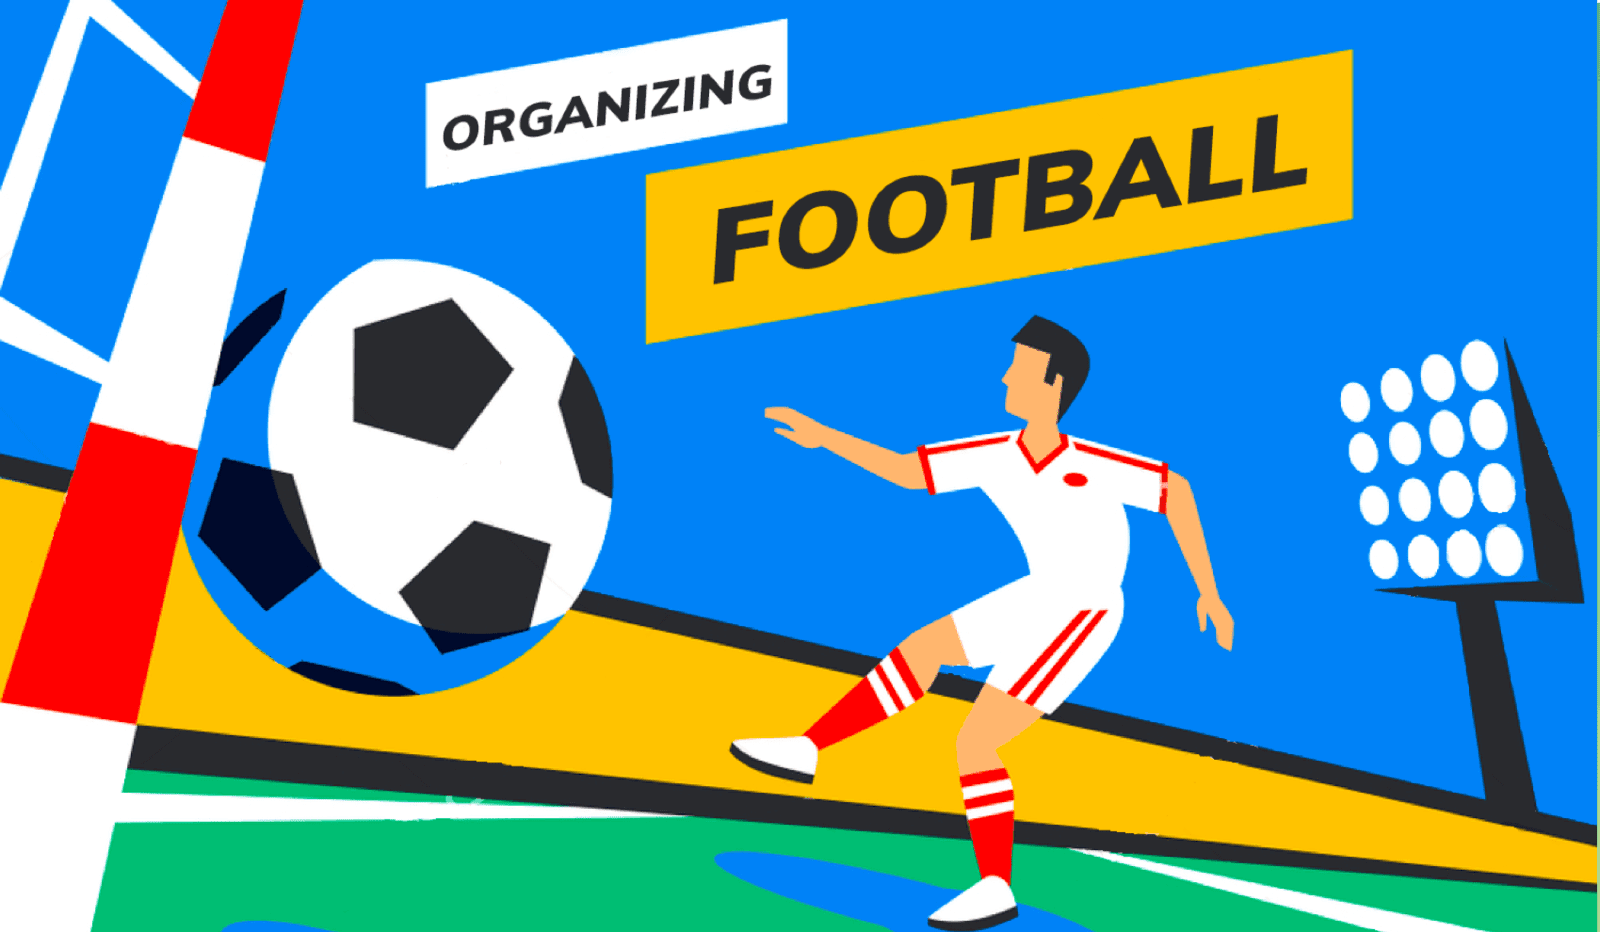 How to organize a football tournament